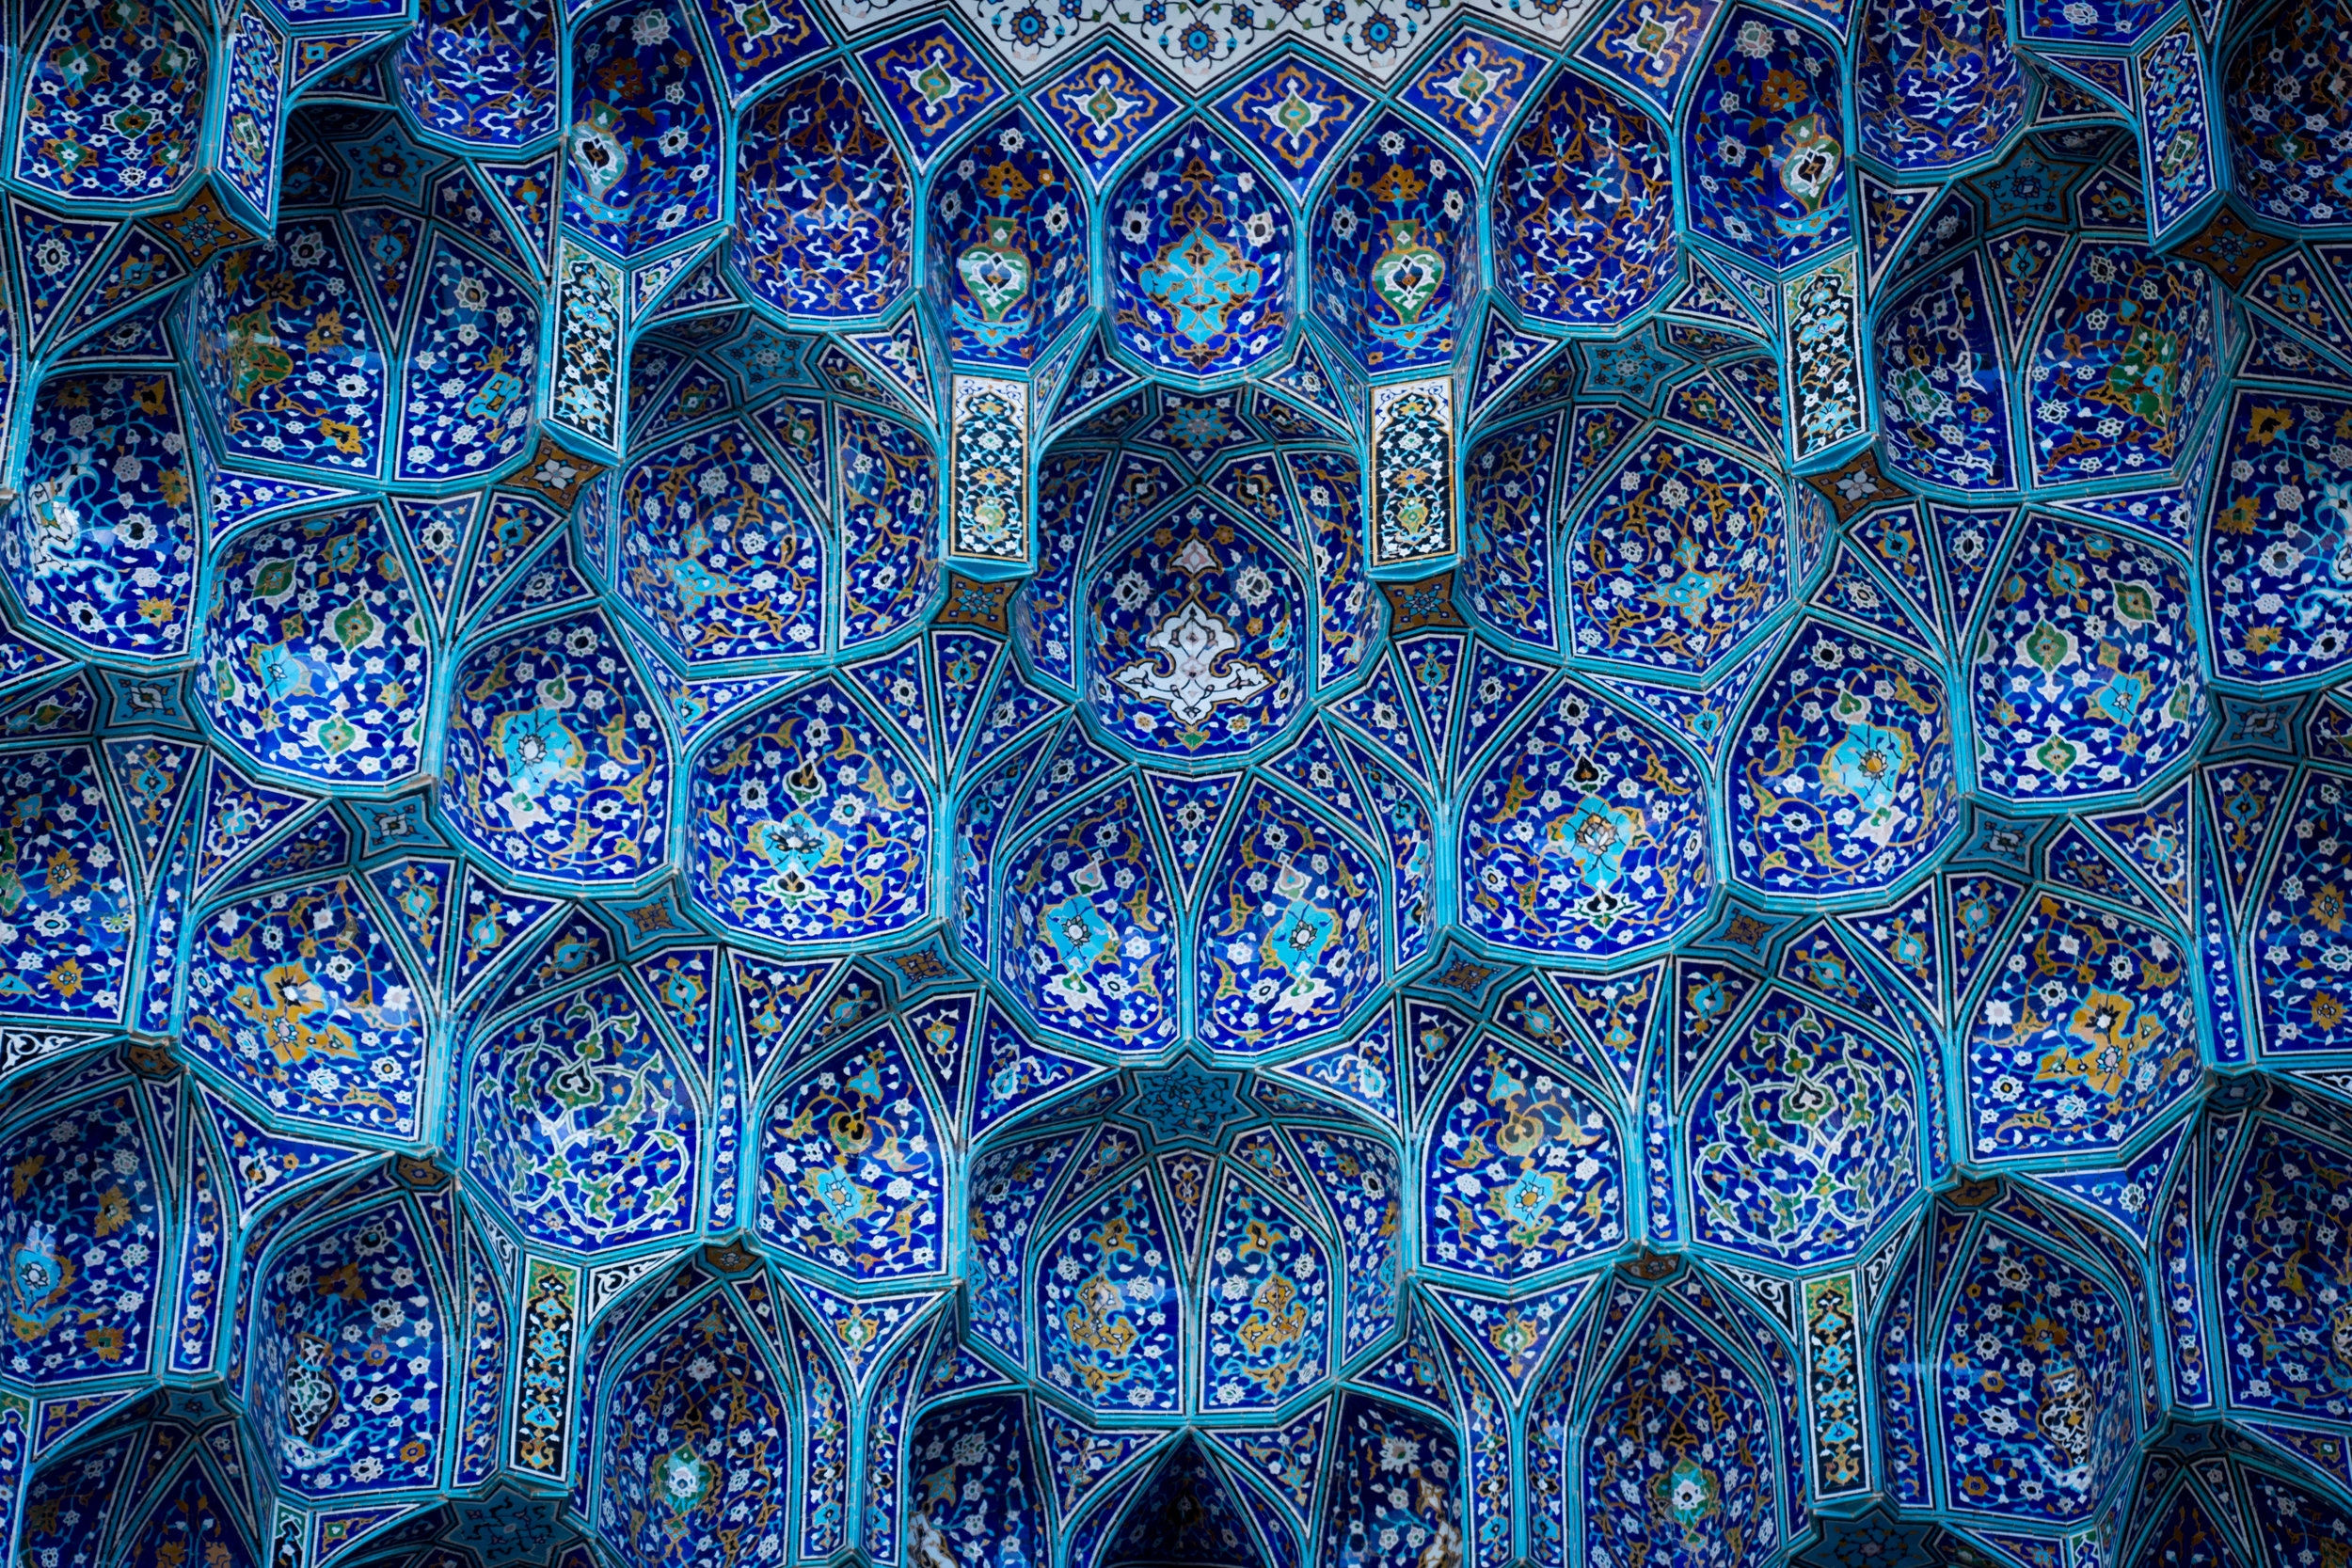 How to learn Islamic patterns — Art of Islamic Illumination